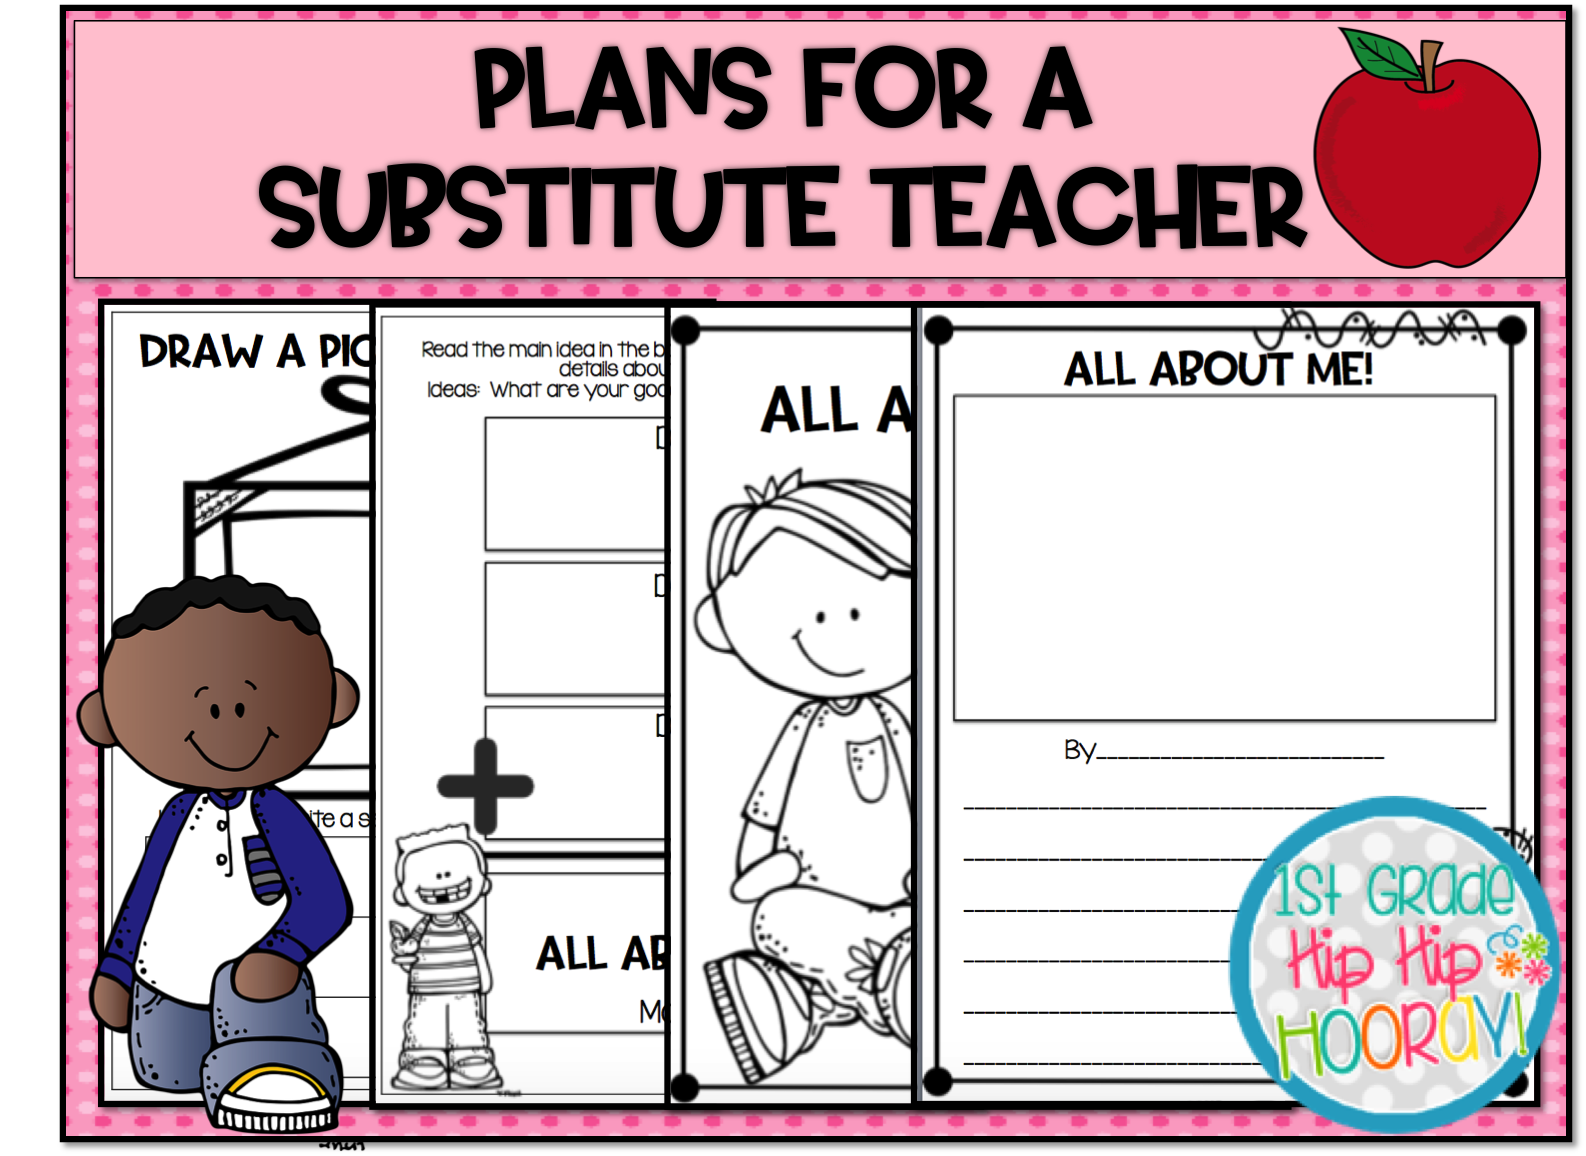 1st-grade-hip-hip-hooray-substitute-teacher-plans-editable